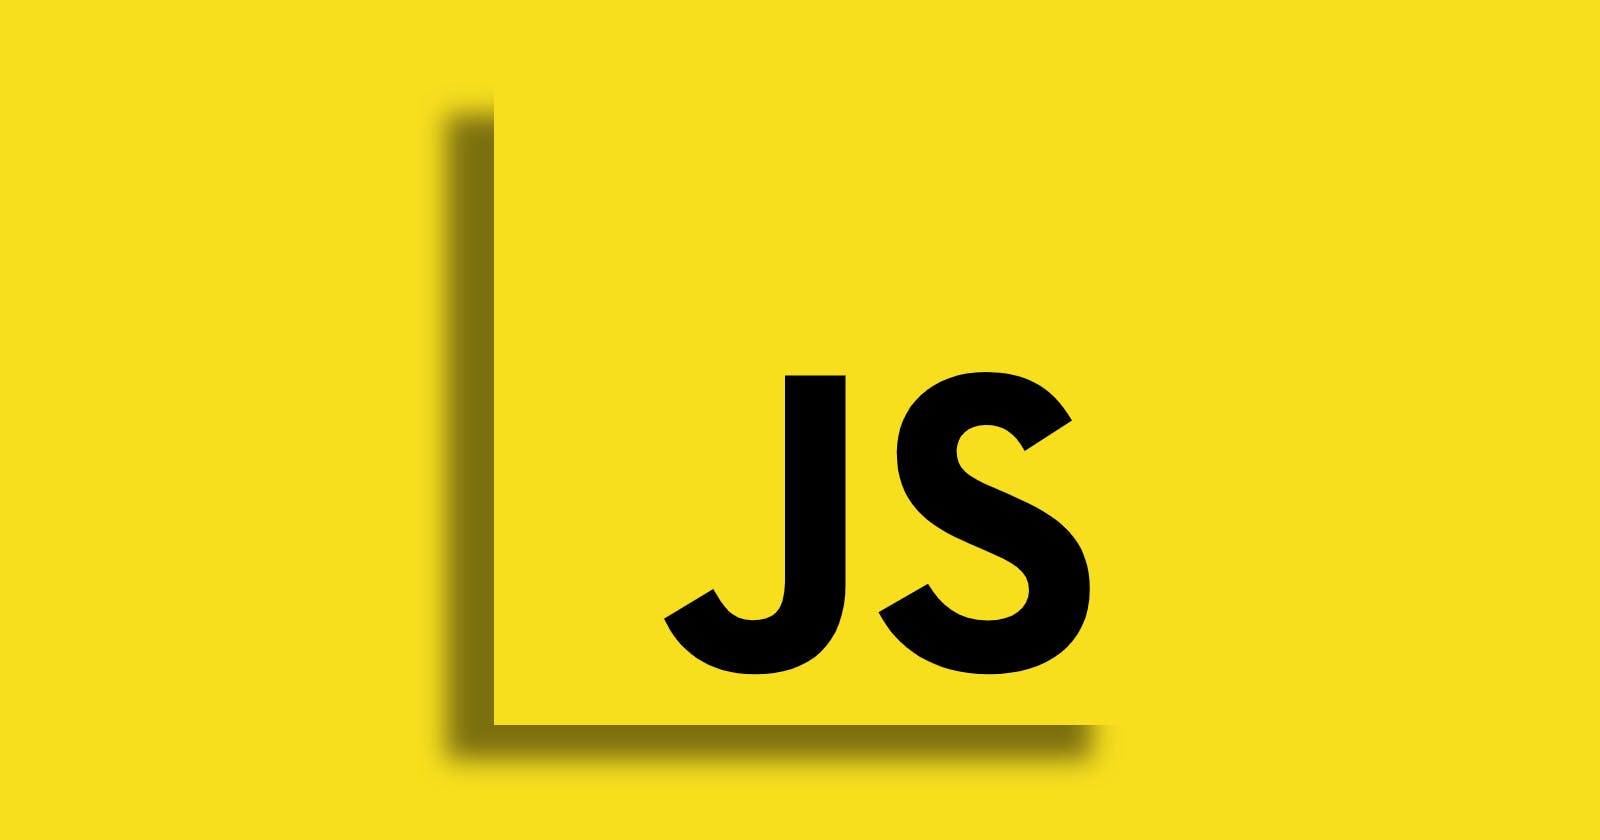 JavaScript Overview